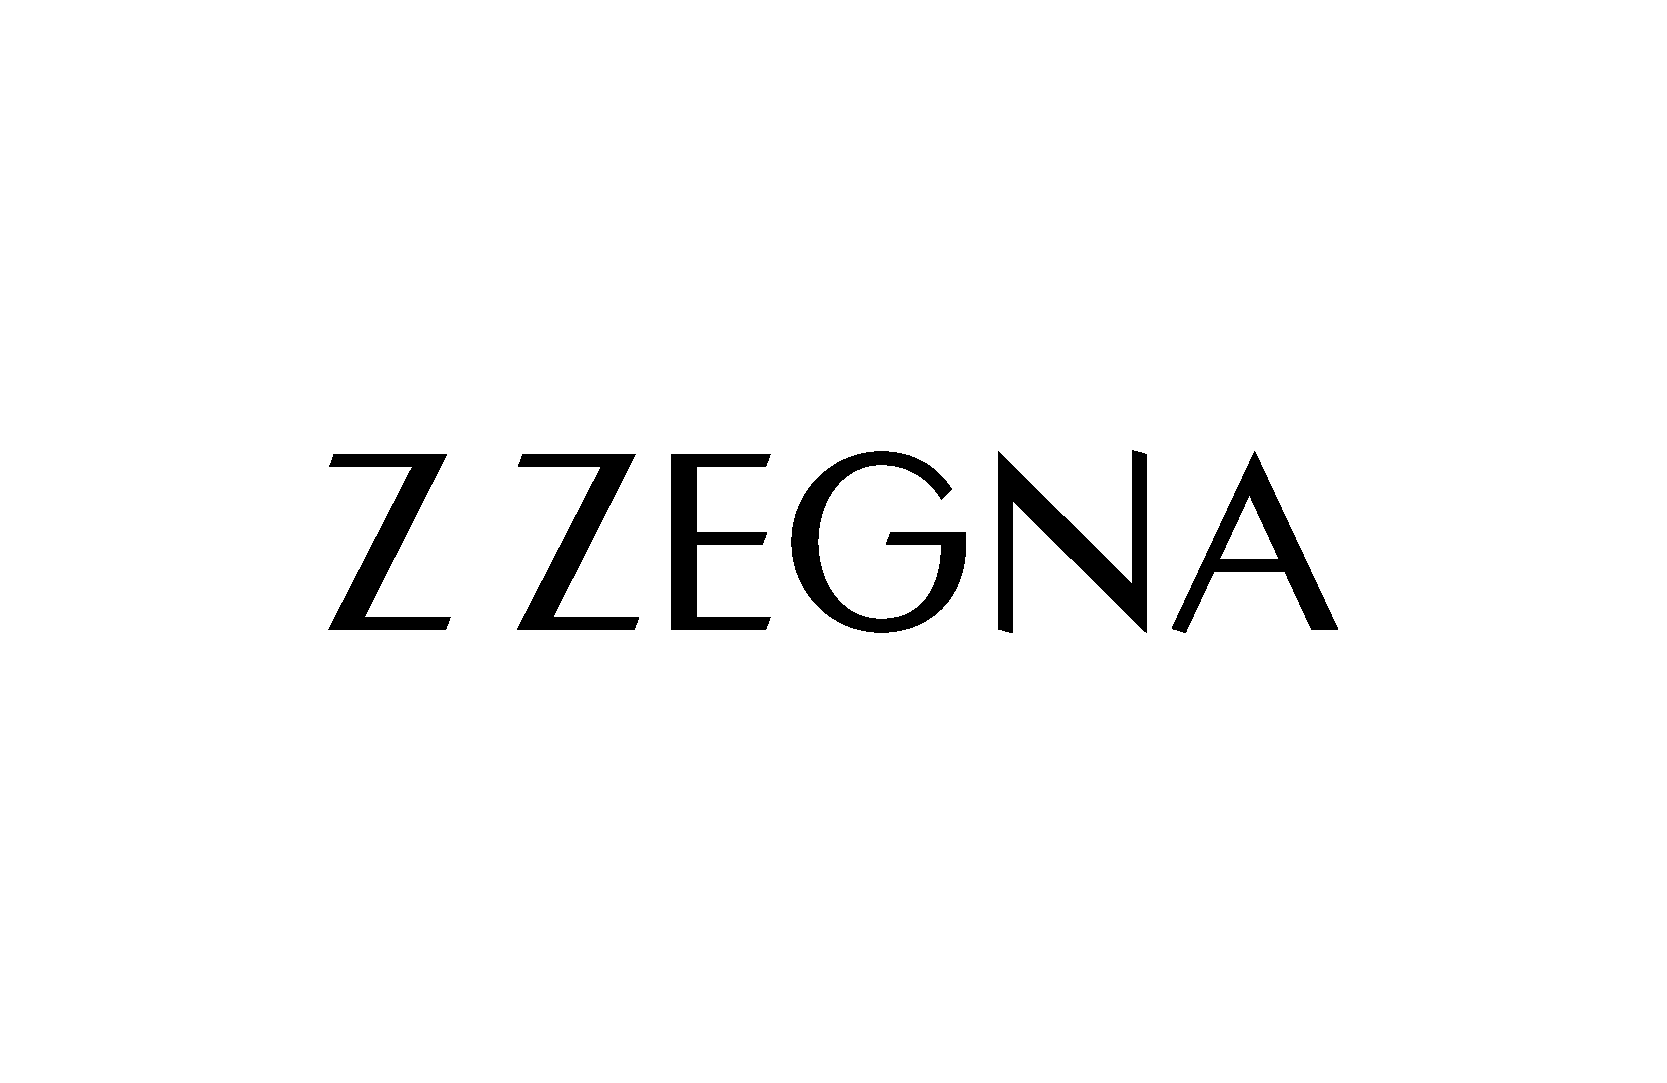 Zegna Logo - LogoDix